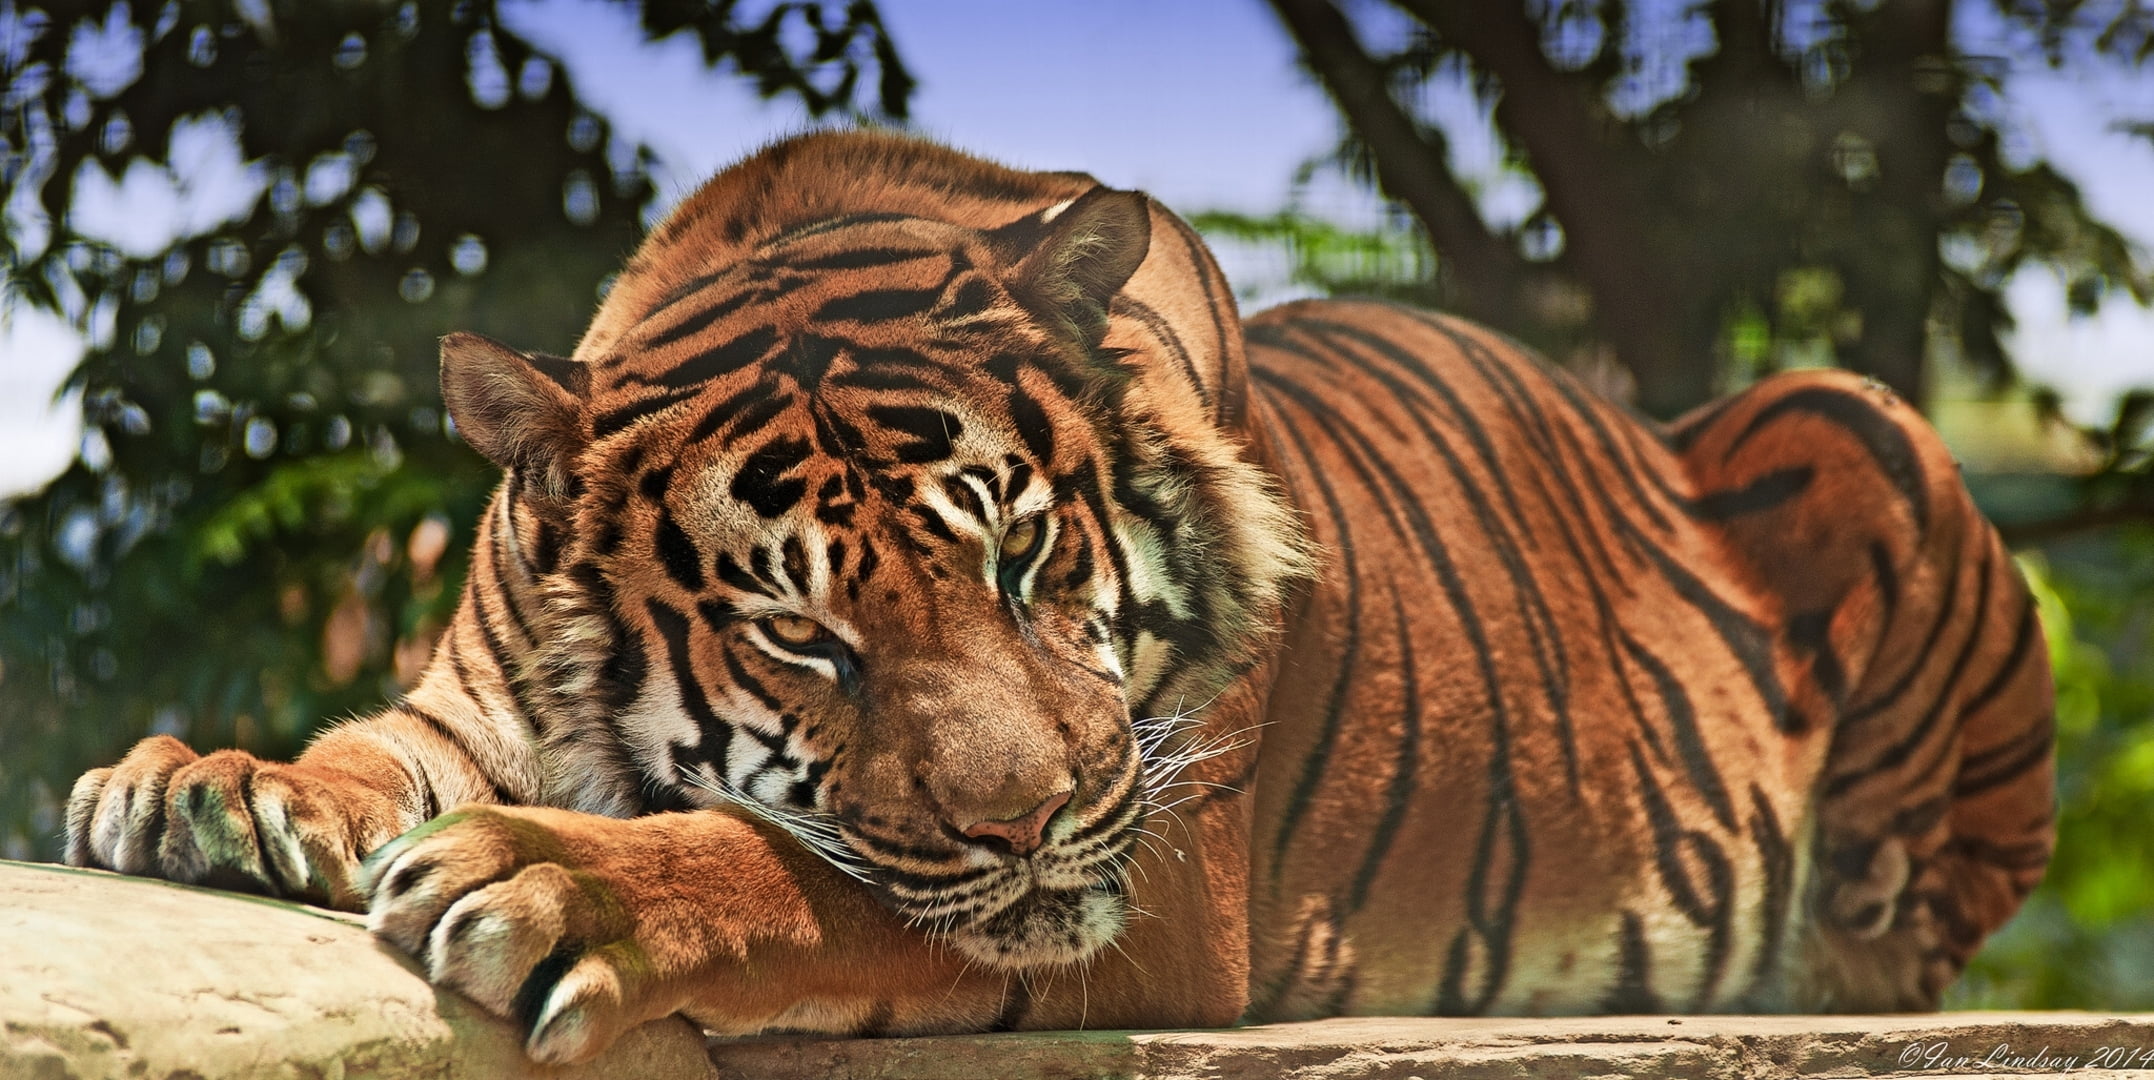 adult tiger, predator, snout, aggression, animal, carnivore, wildlife